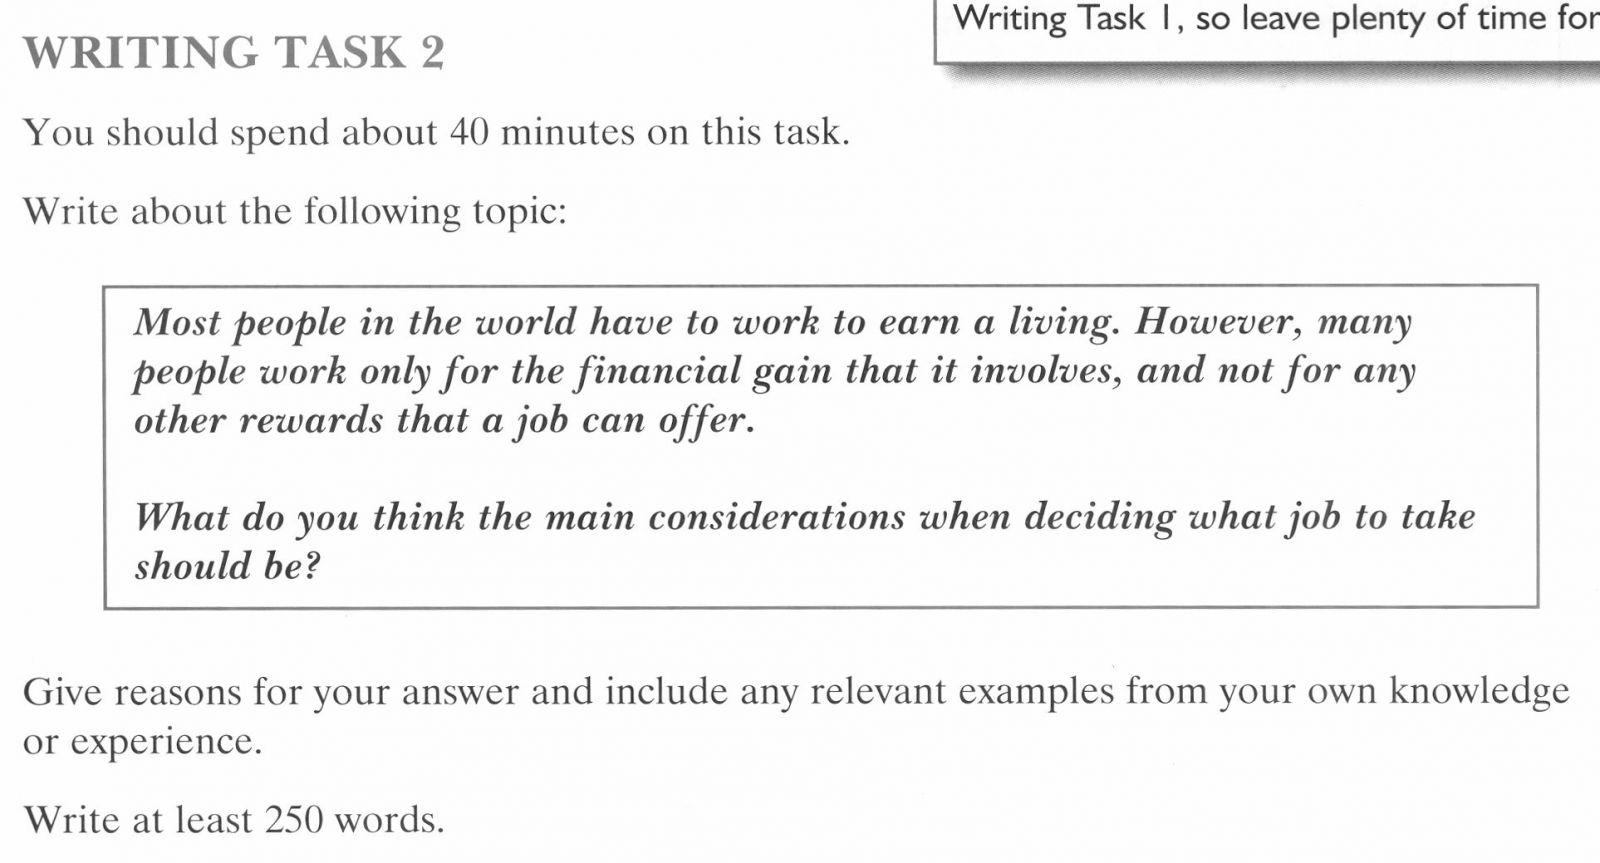 Writing task 2 questions. IELTS writing task 2. IELTS writing task 2 topics. IELTS writing task 2 Sample essays. Sample IELTS writing question task 2.